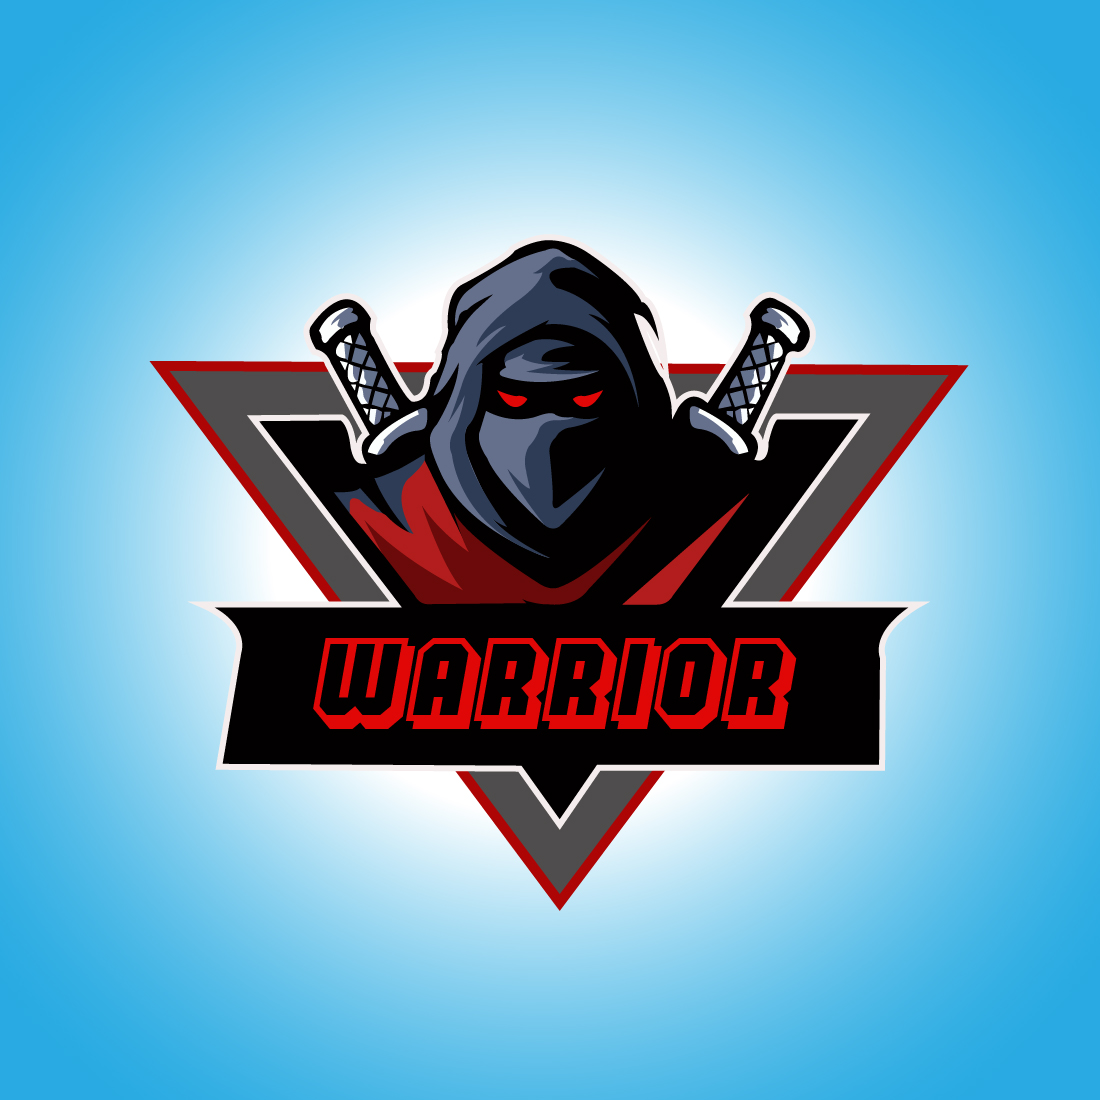 Warrior gaming mascot logo preview image.